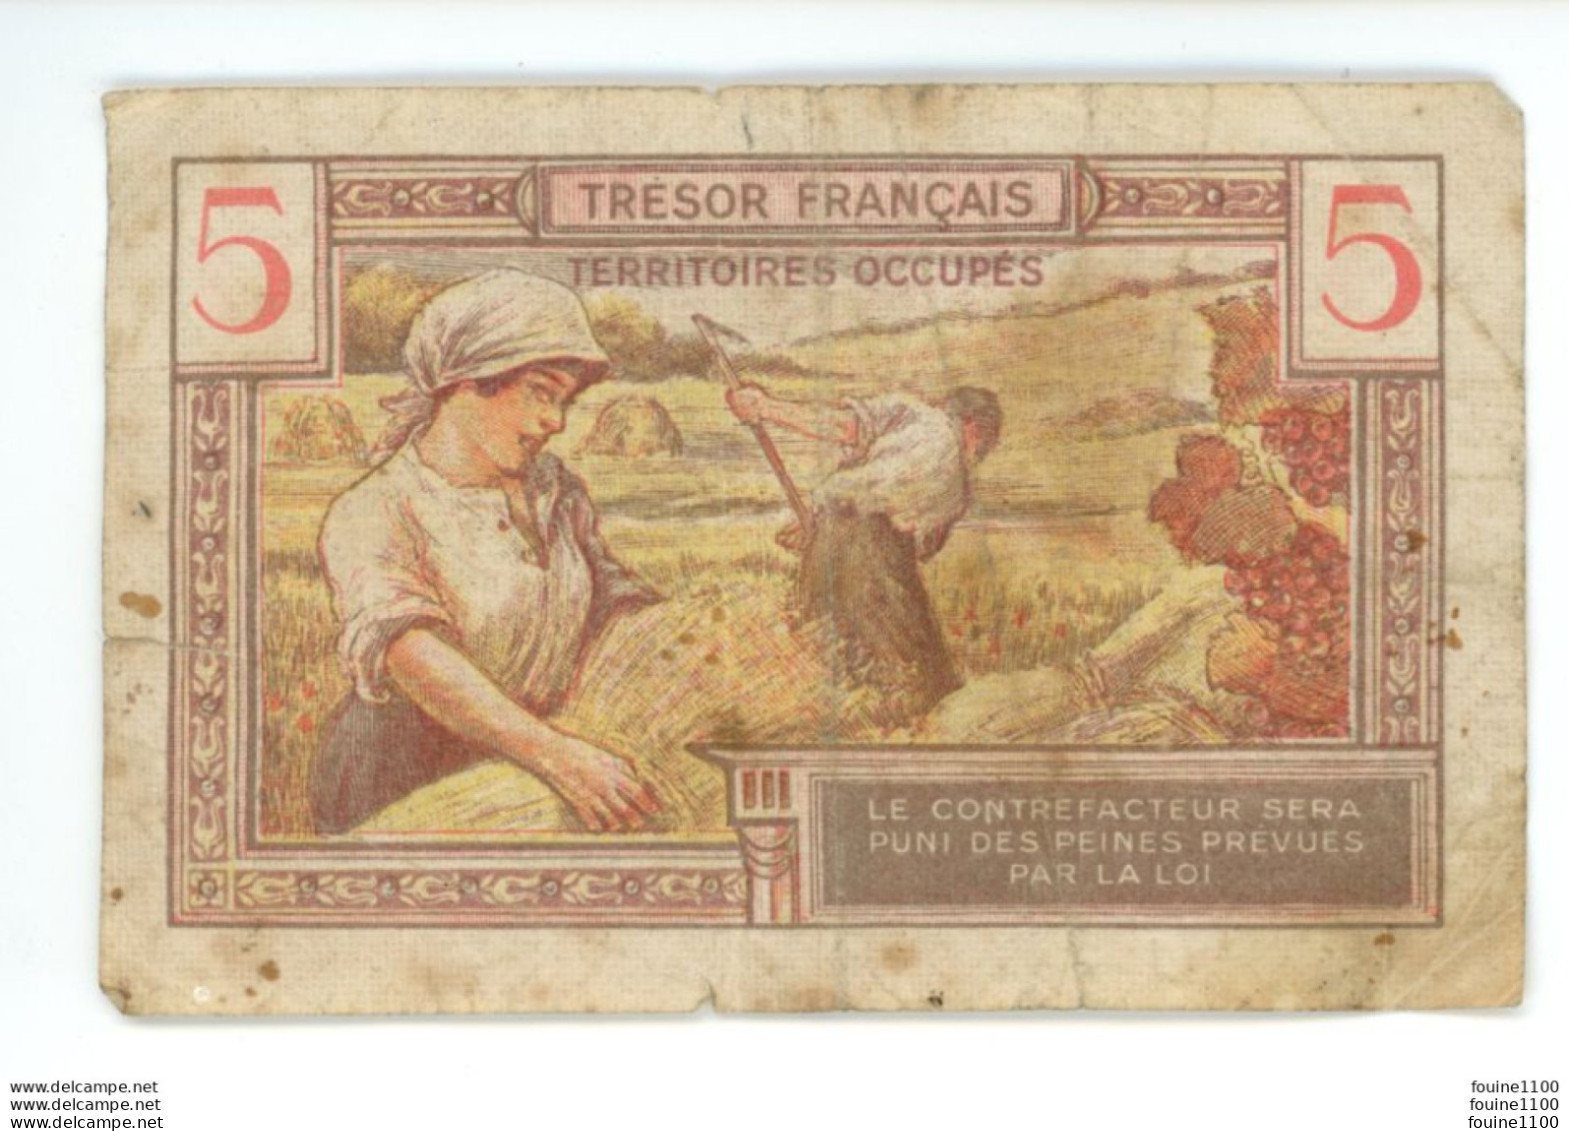 Billet , FRANCE , 5 Francs , Cinq , TRESOR FRANCAIS , Territoires Occupés - 1947 Trésor Français